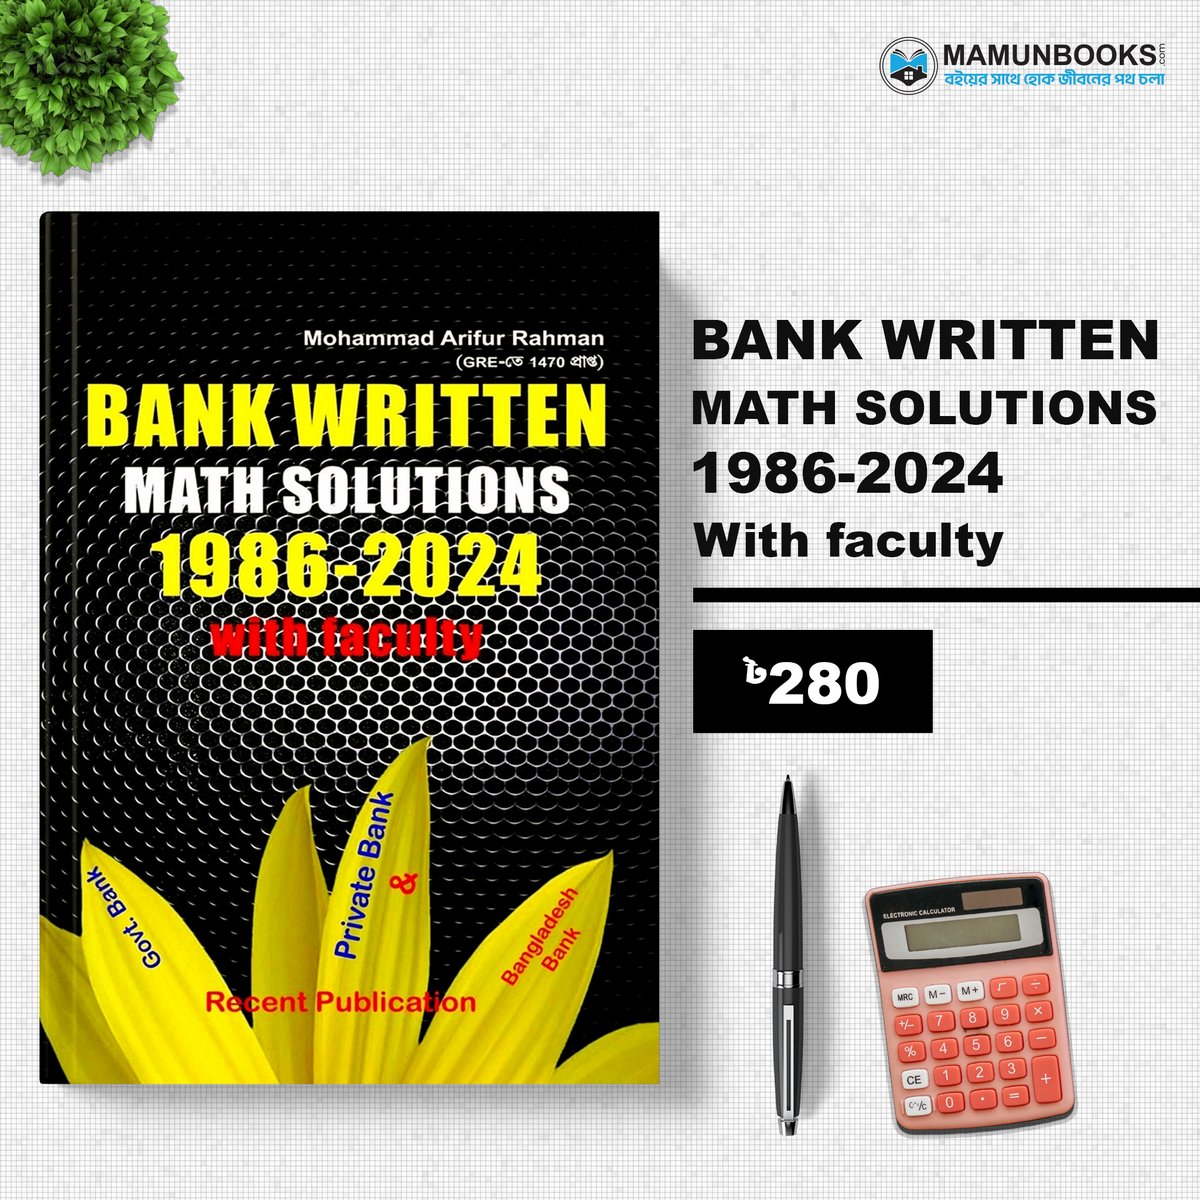 Title : Bank Written Math Solutions 1986-2024 With Faculty
Author : রিসেন্ট পাবলিকেশন এডিটোরিয়াল বোর্ড, Recent Publication Editorial Board
Publisher : রিসেন্ট পাবলিকেশন্স
Edition : 2024
Country : Bangladesh
Language : Bengali, English,